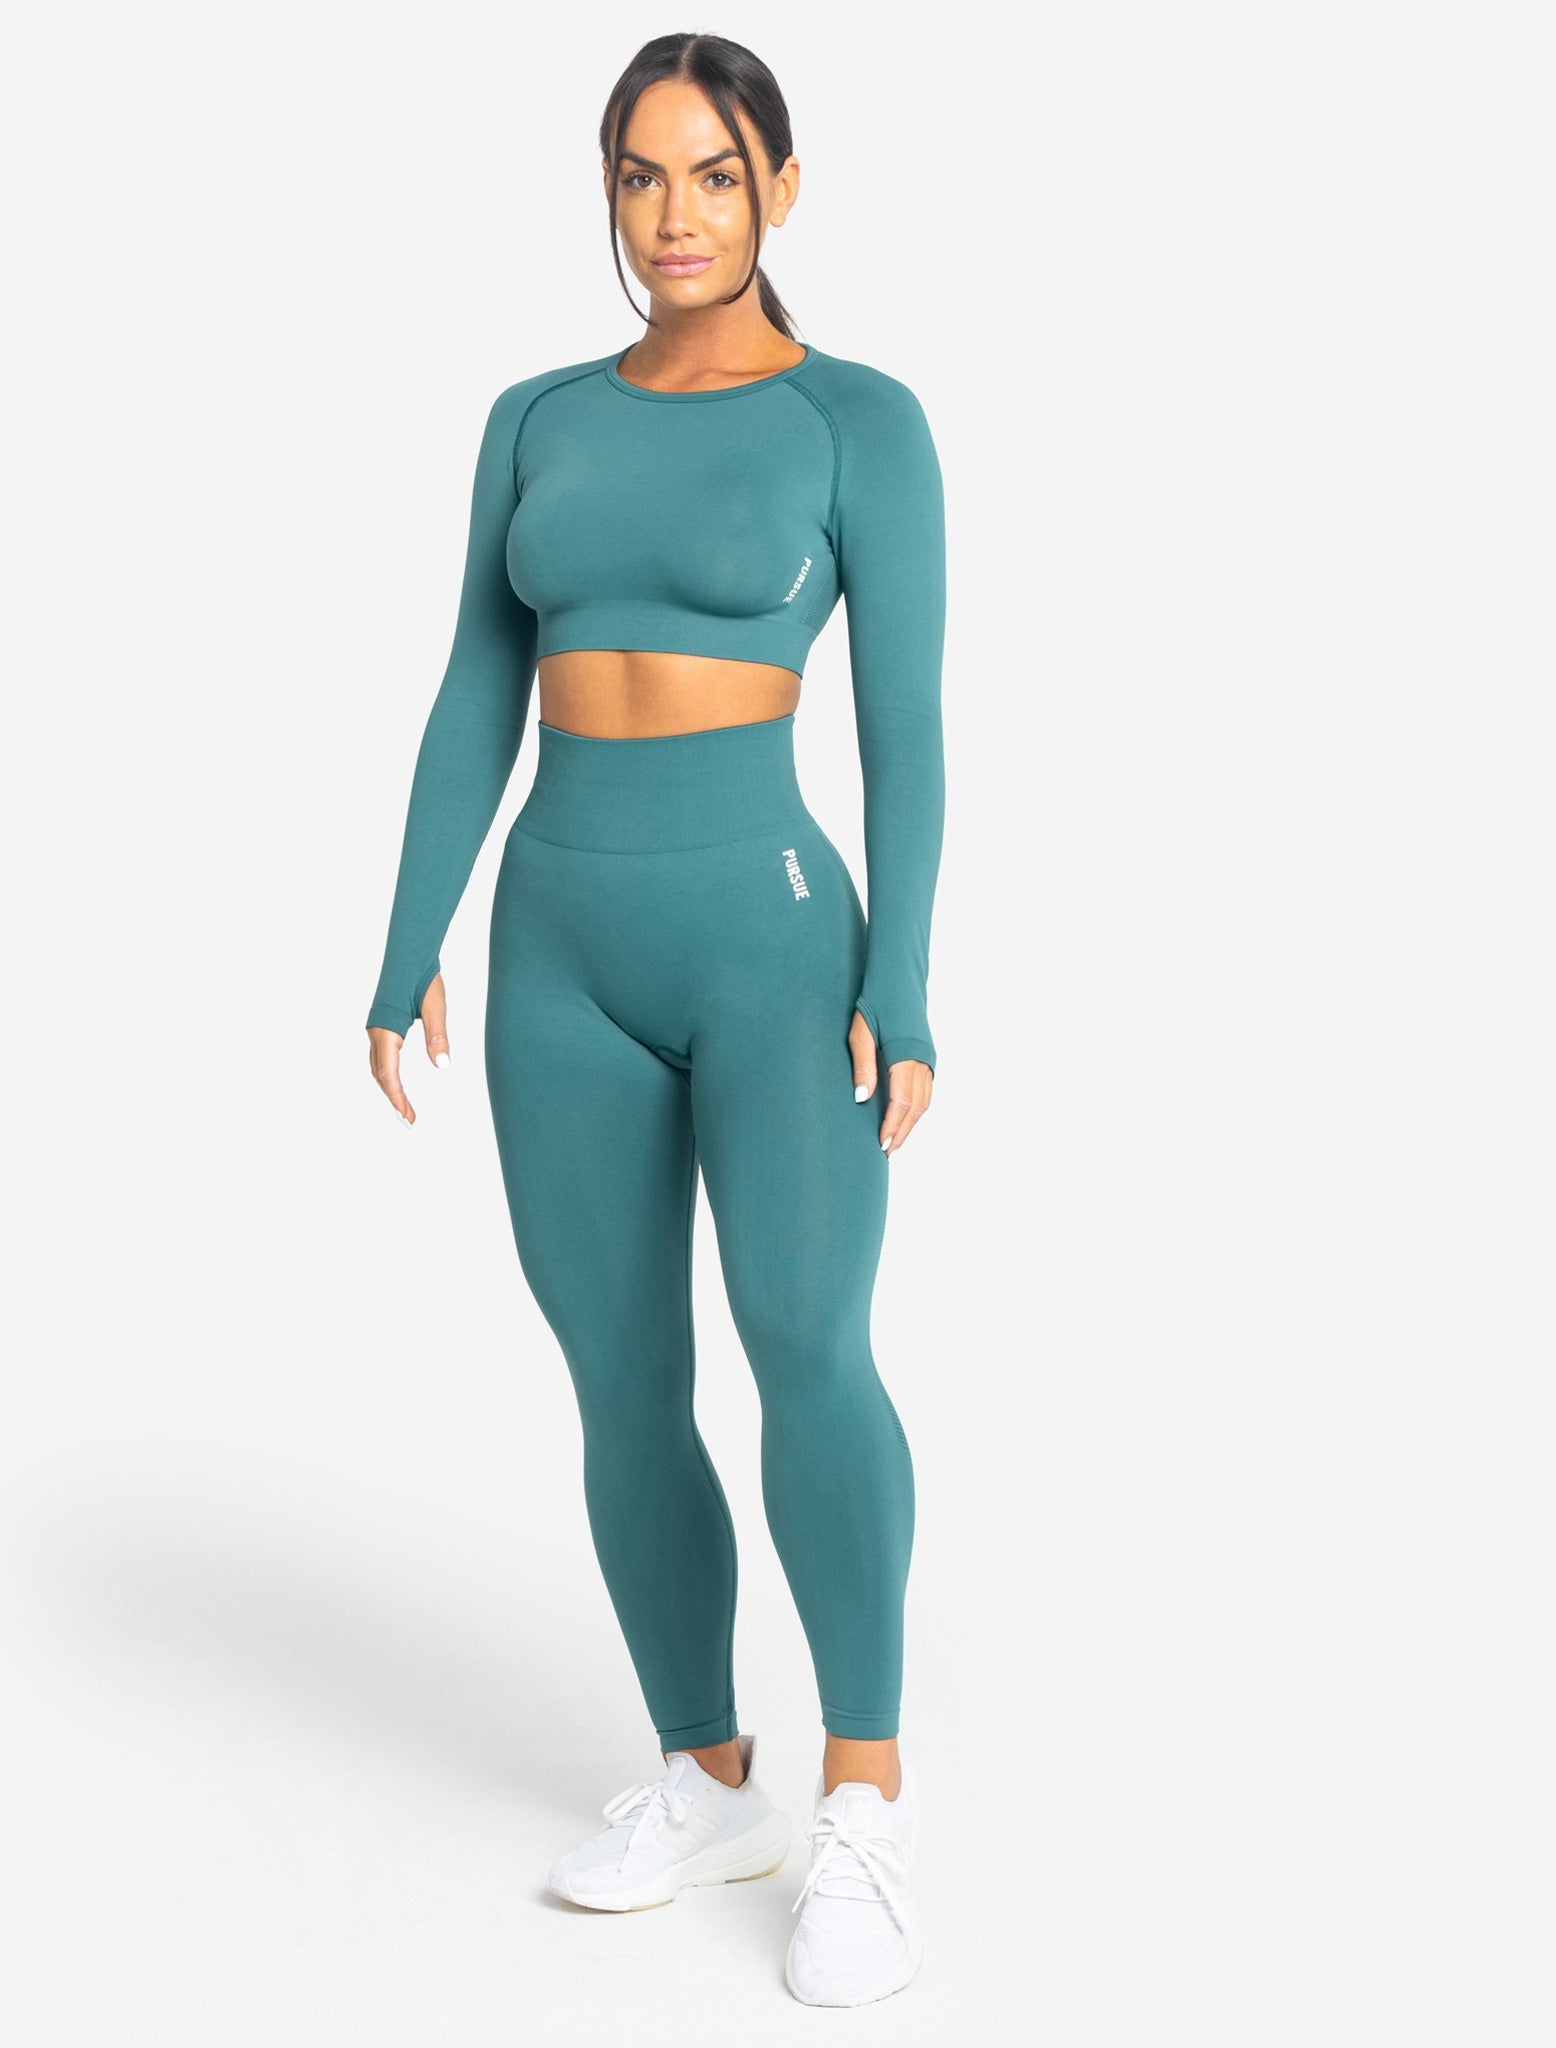 2 Piece Sets Women Outfit Seamless Yoga Set Gym Sportswear Push Up